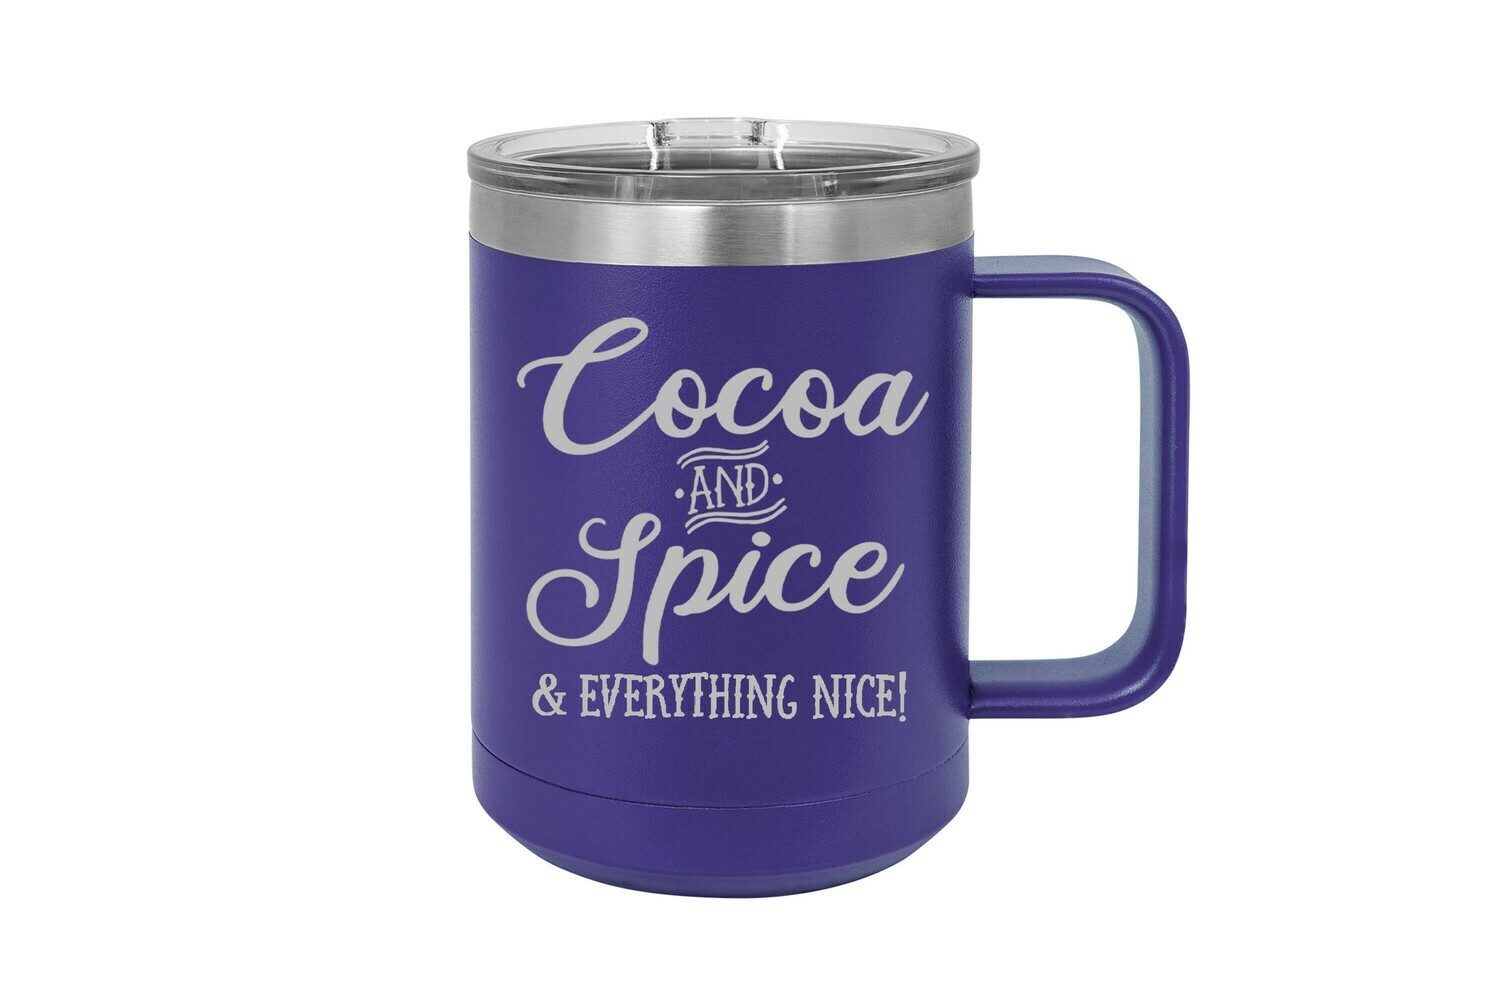 Cocoa and Spice & Everything Nice 15 oz Insulated Mug